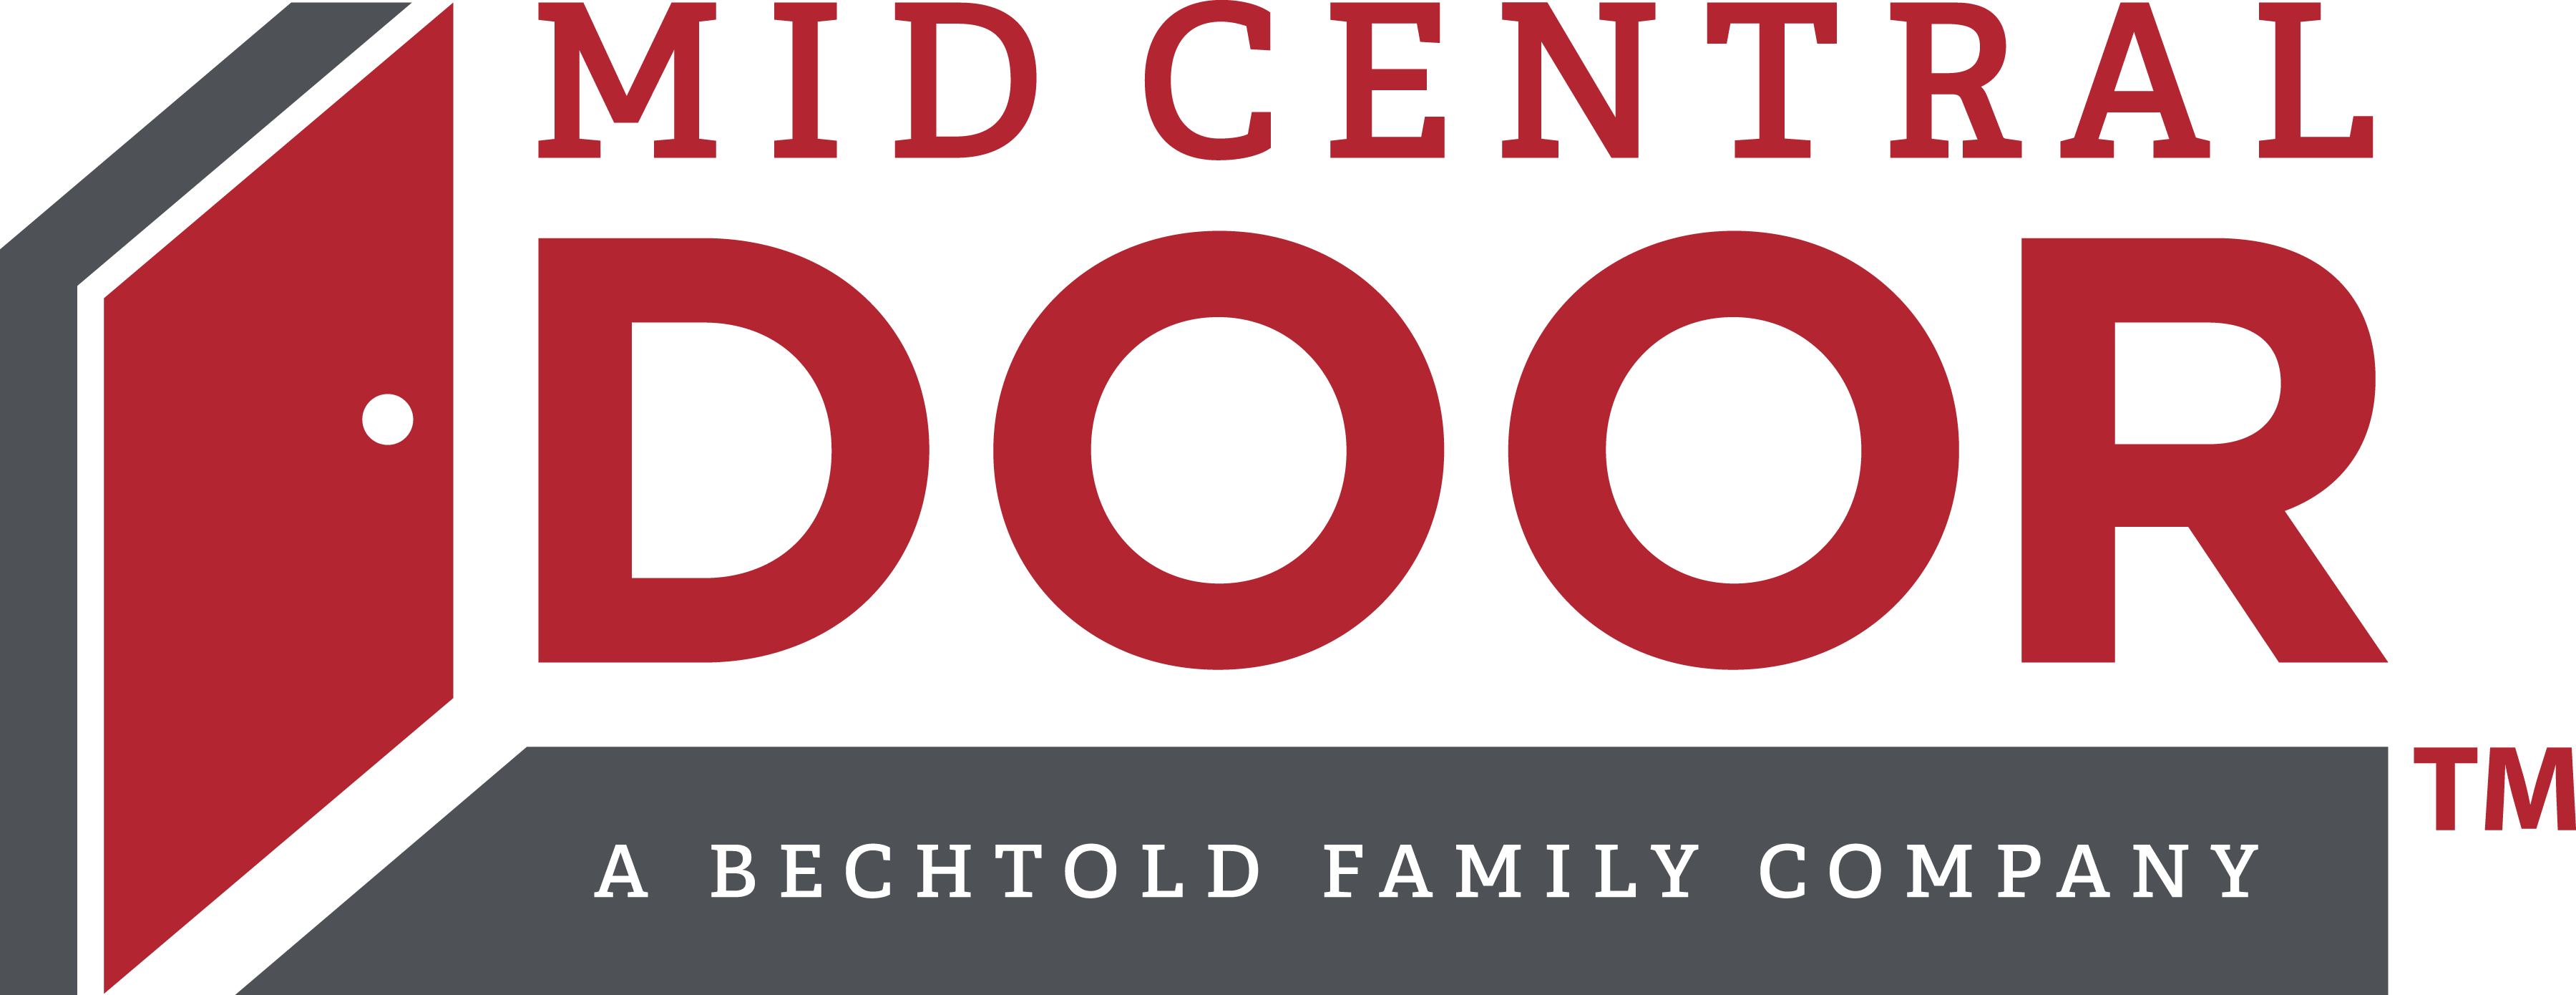 Mid Central Door Logo